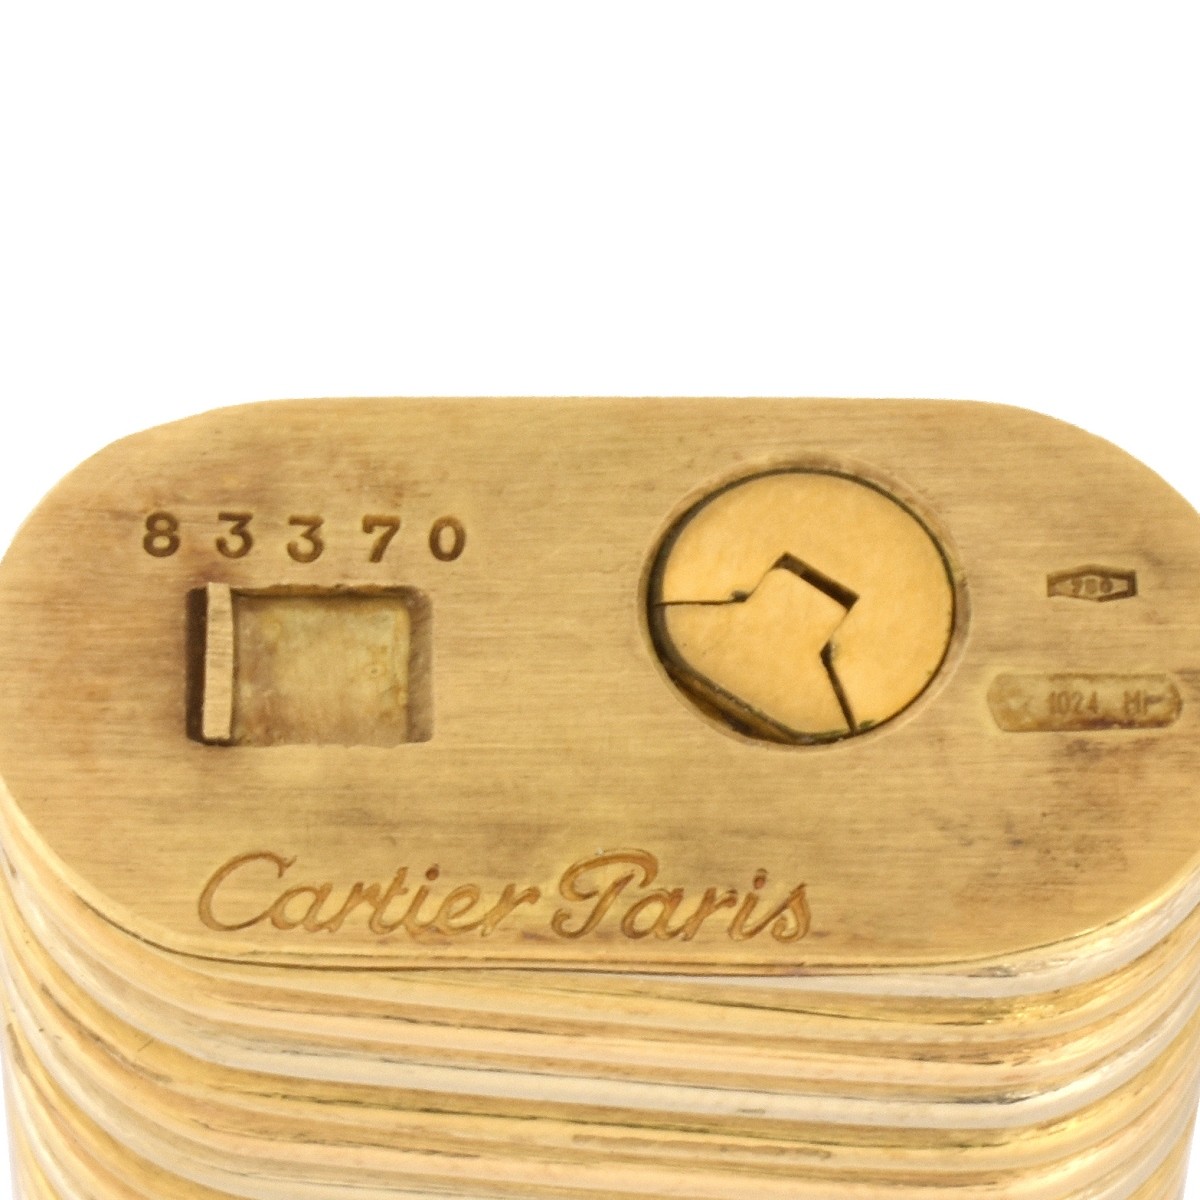 Cartier 18K Cigarette Lighter